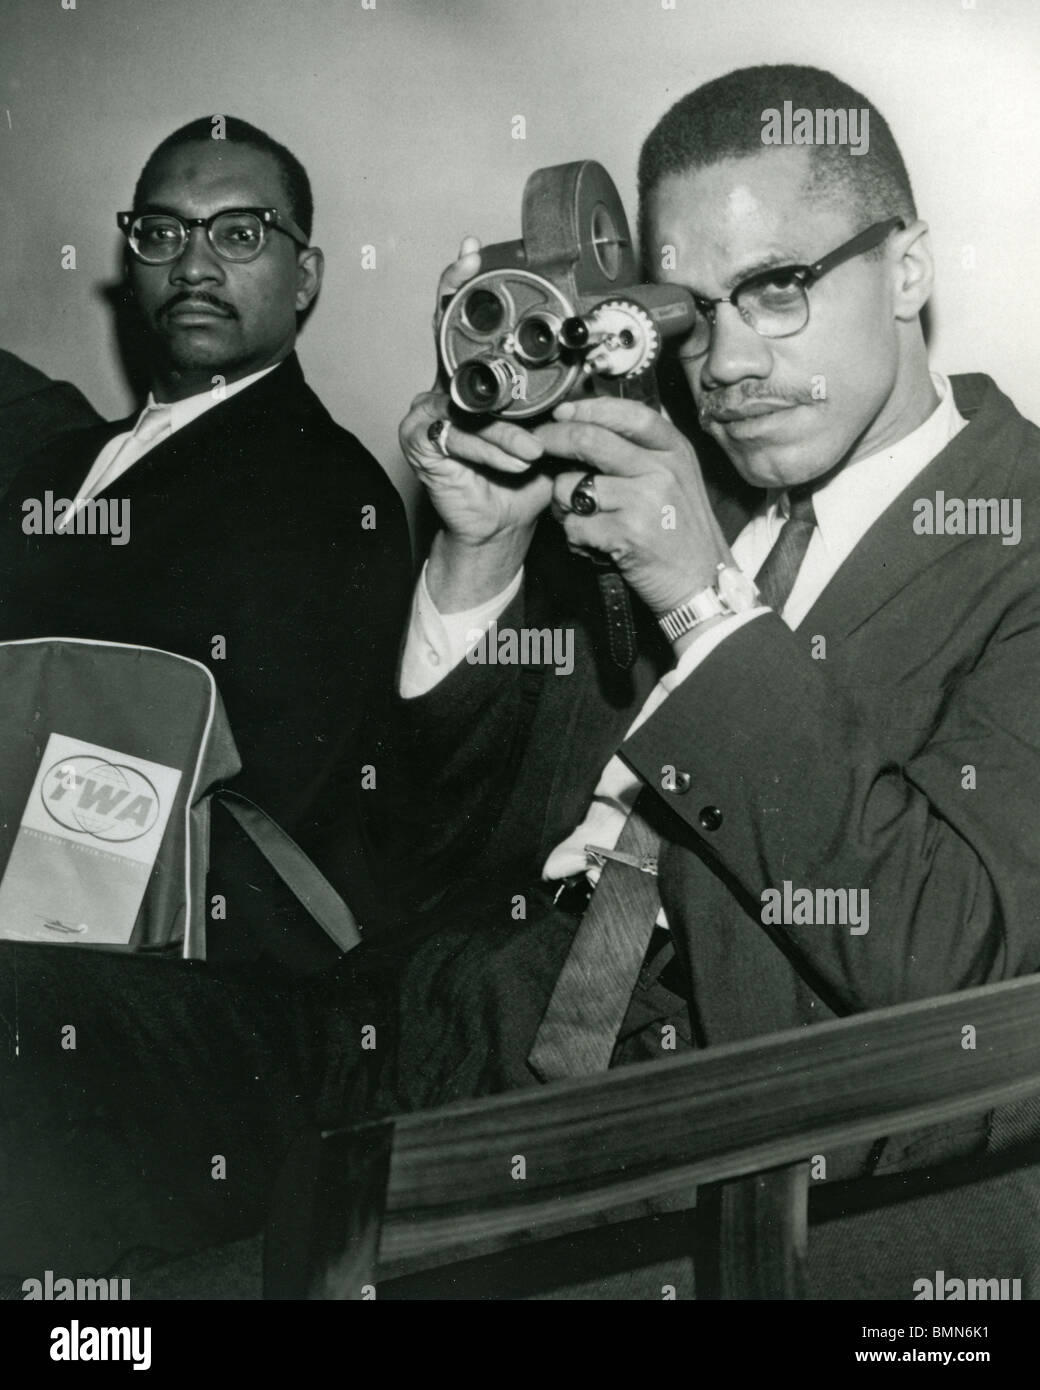 MALCOLM X - US Black Muslim leader in 1964 - see Description below Stock Photo